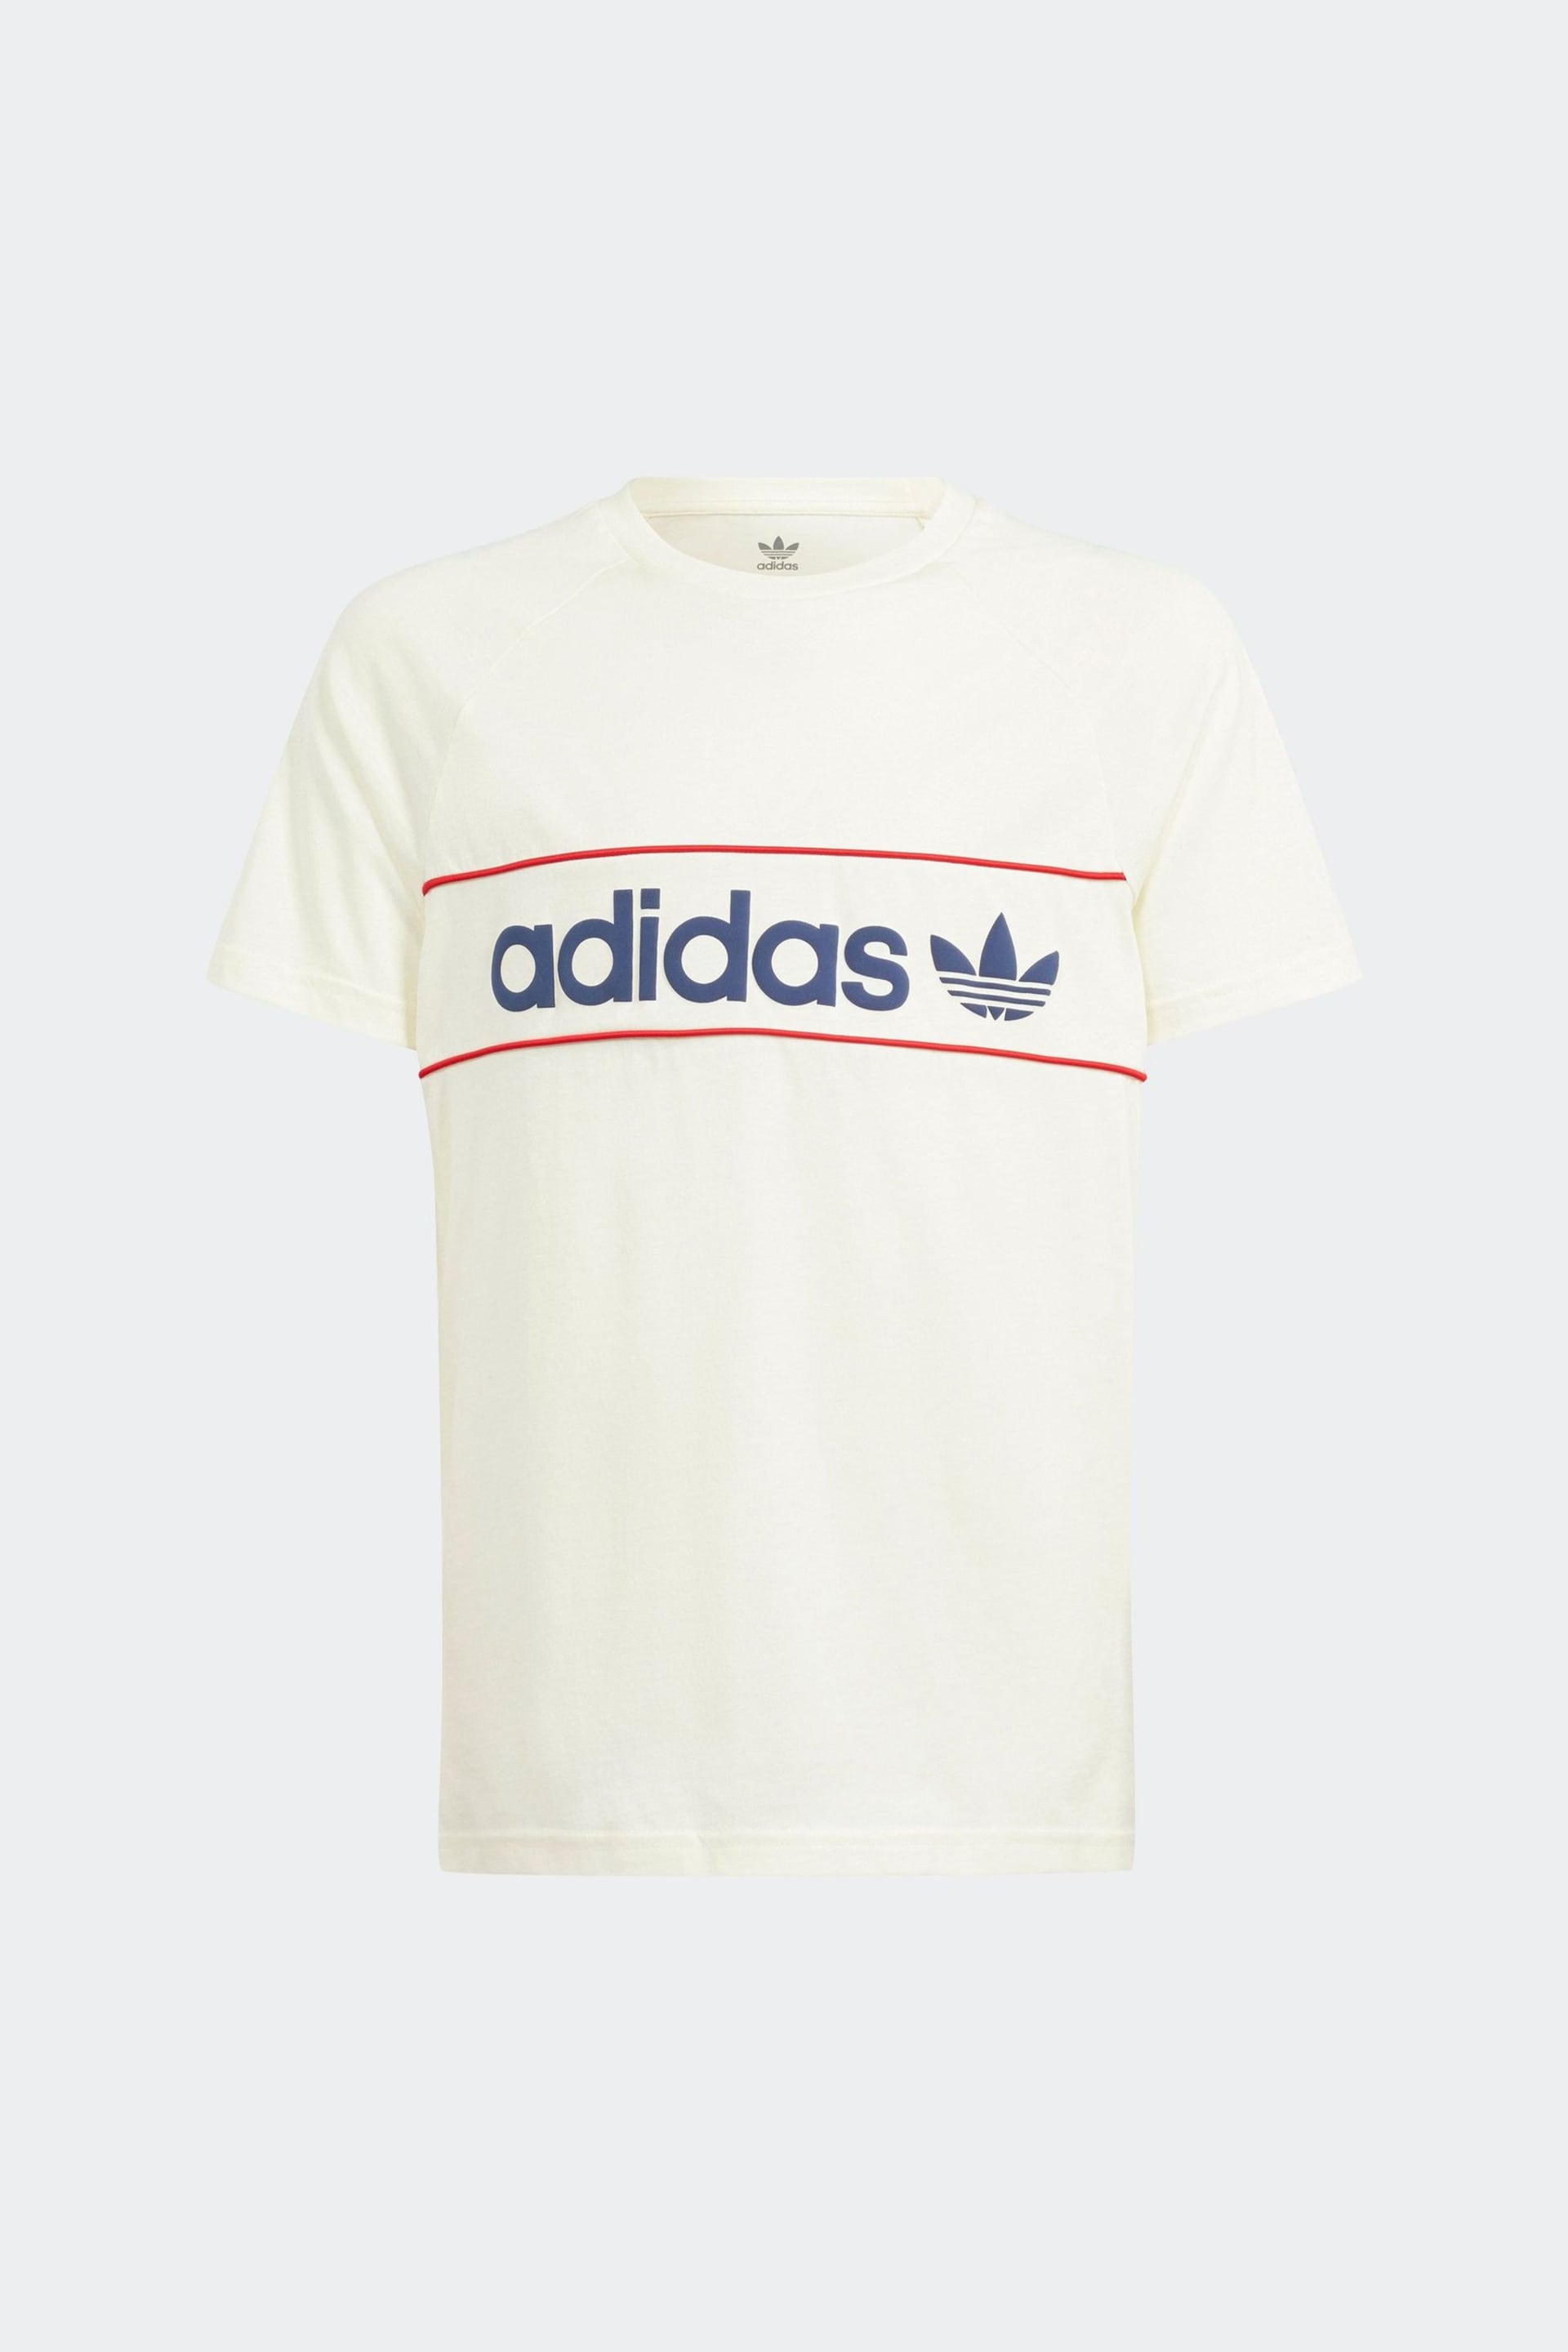 adidas Originals Adidas Ny T-Shirt - Image 5 of 9